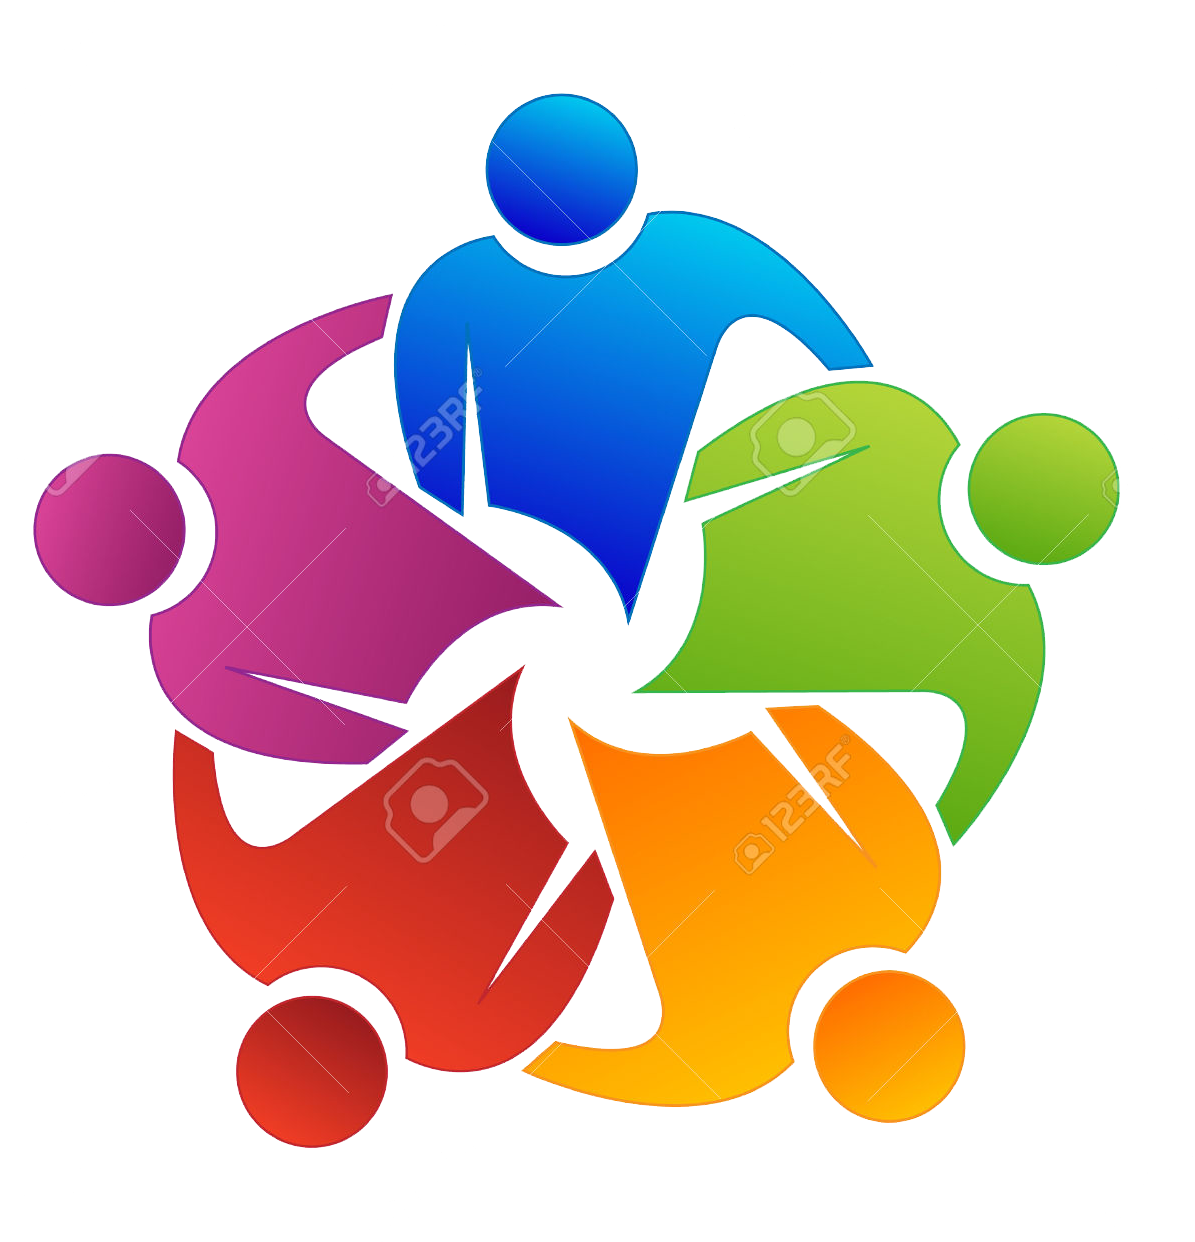 Teamwork Logos Download - Bank2home.com